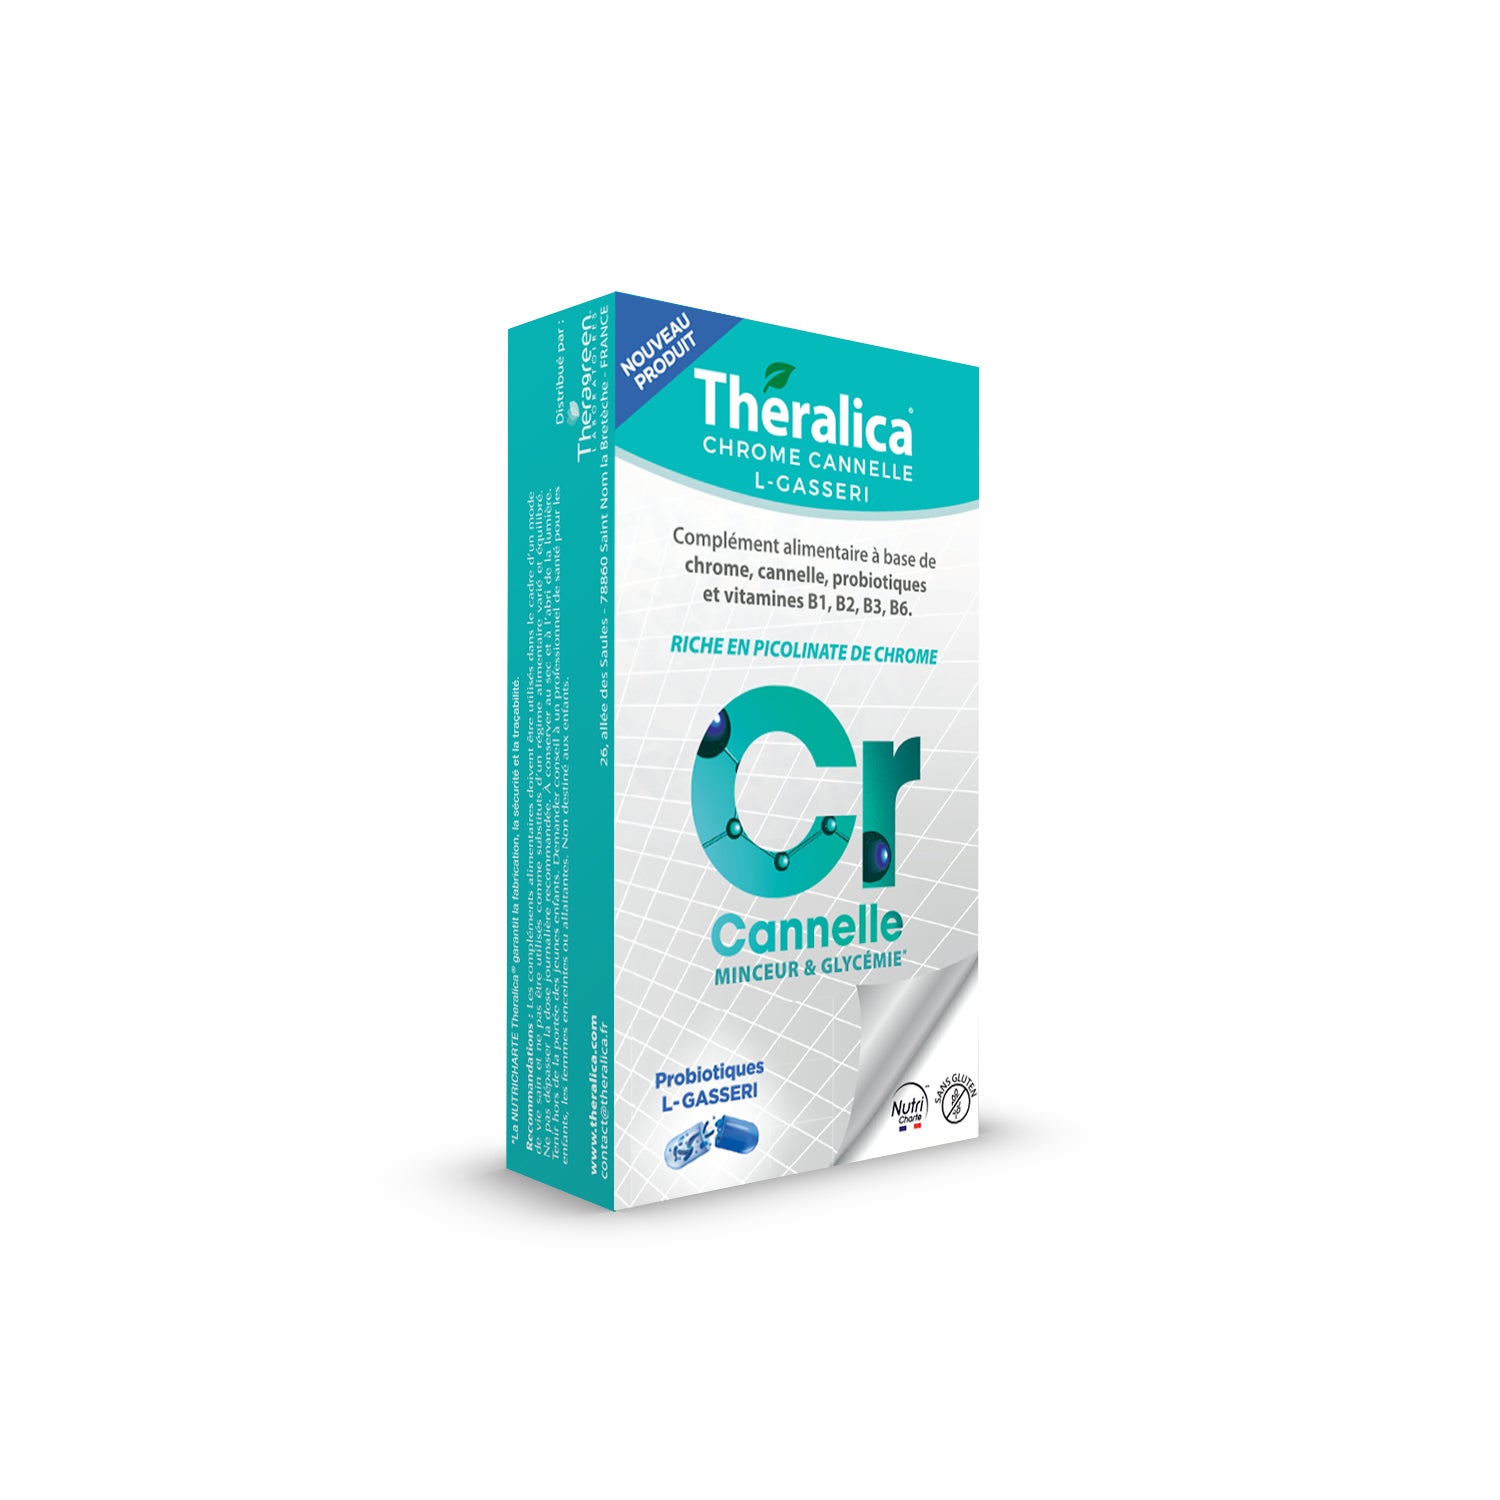 Theralica Chrome Cannelle L-Casseri 30 Gélules